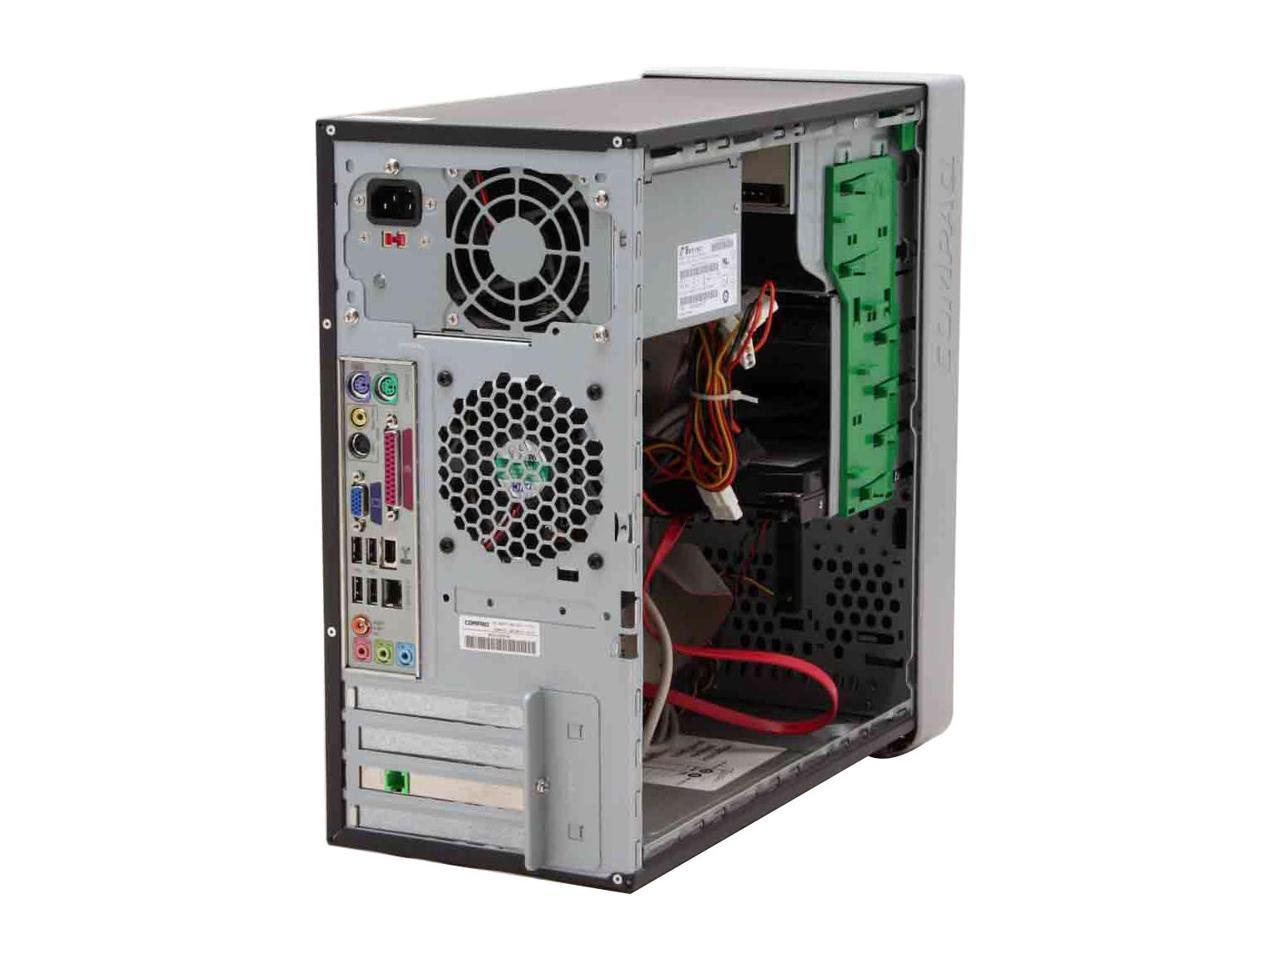 COMPAQ Desktop PC Presario SR1625NX(ER100AA) Athlon 3200+ 1GB DDR 160GB